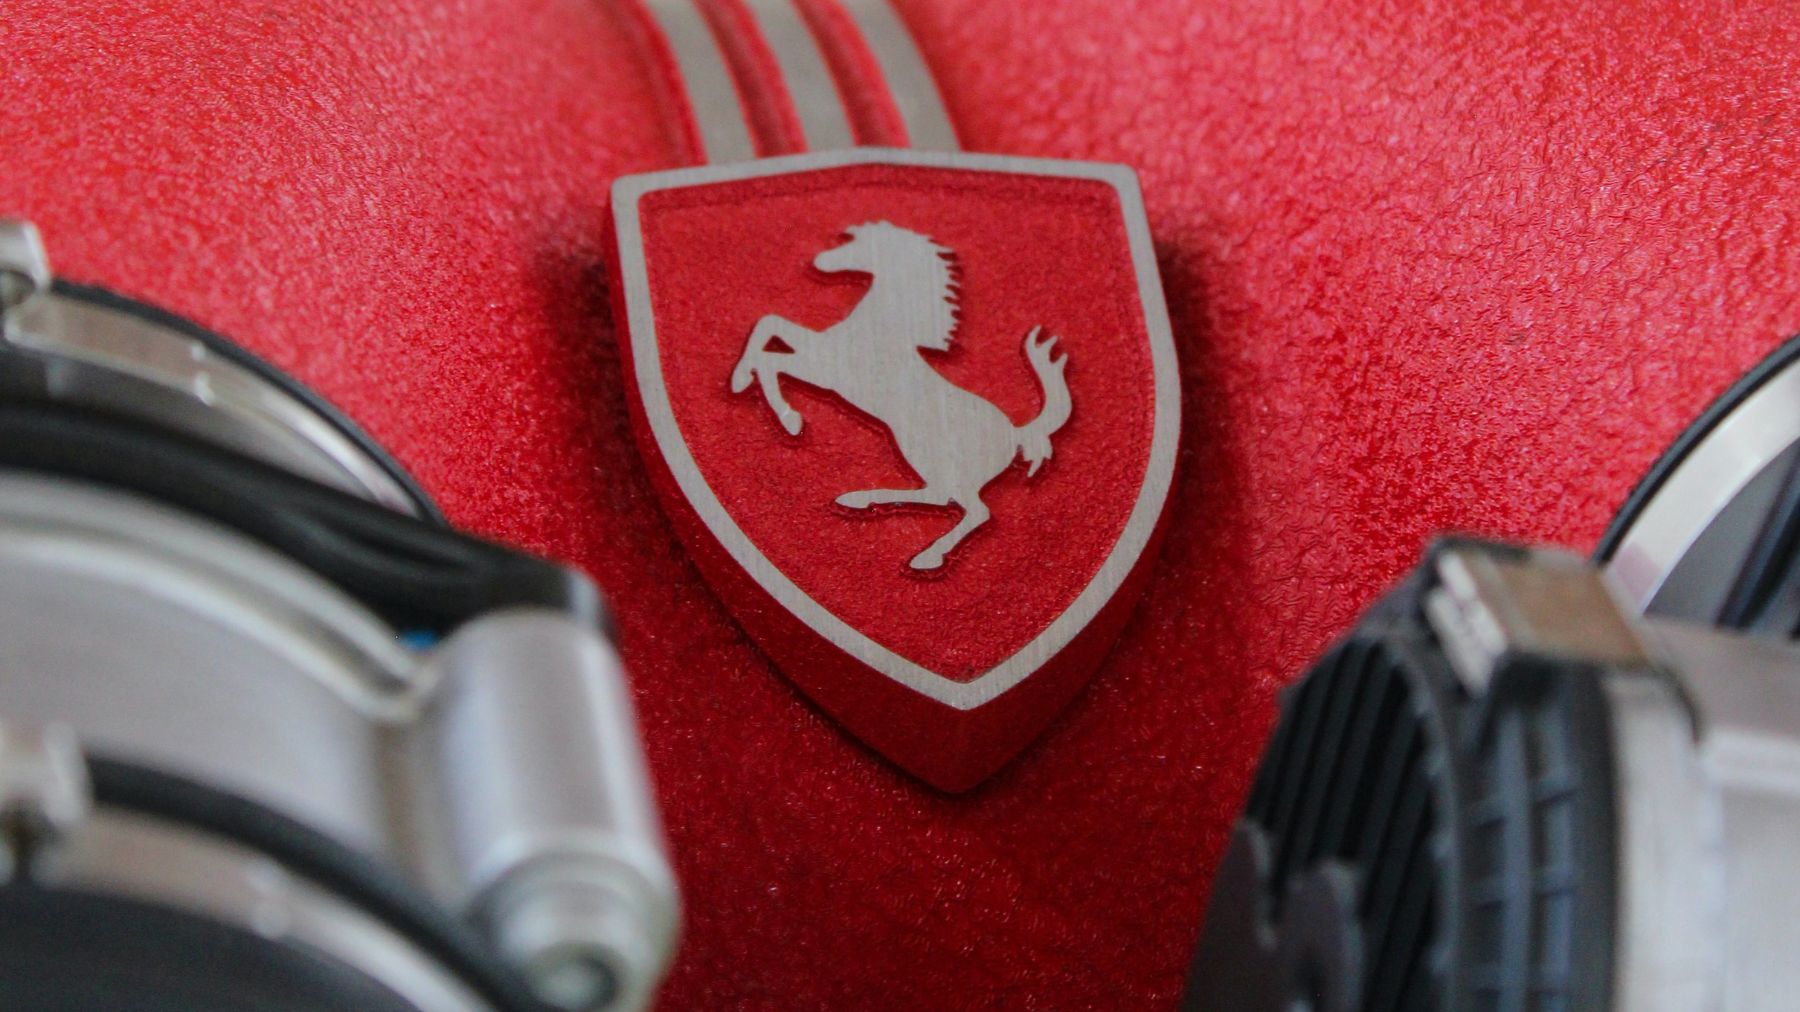 Terza certificazione Equal Salary per Ferrari: un esempio di gender equality